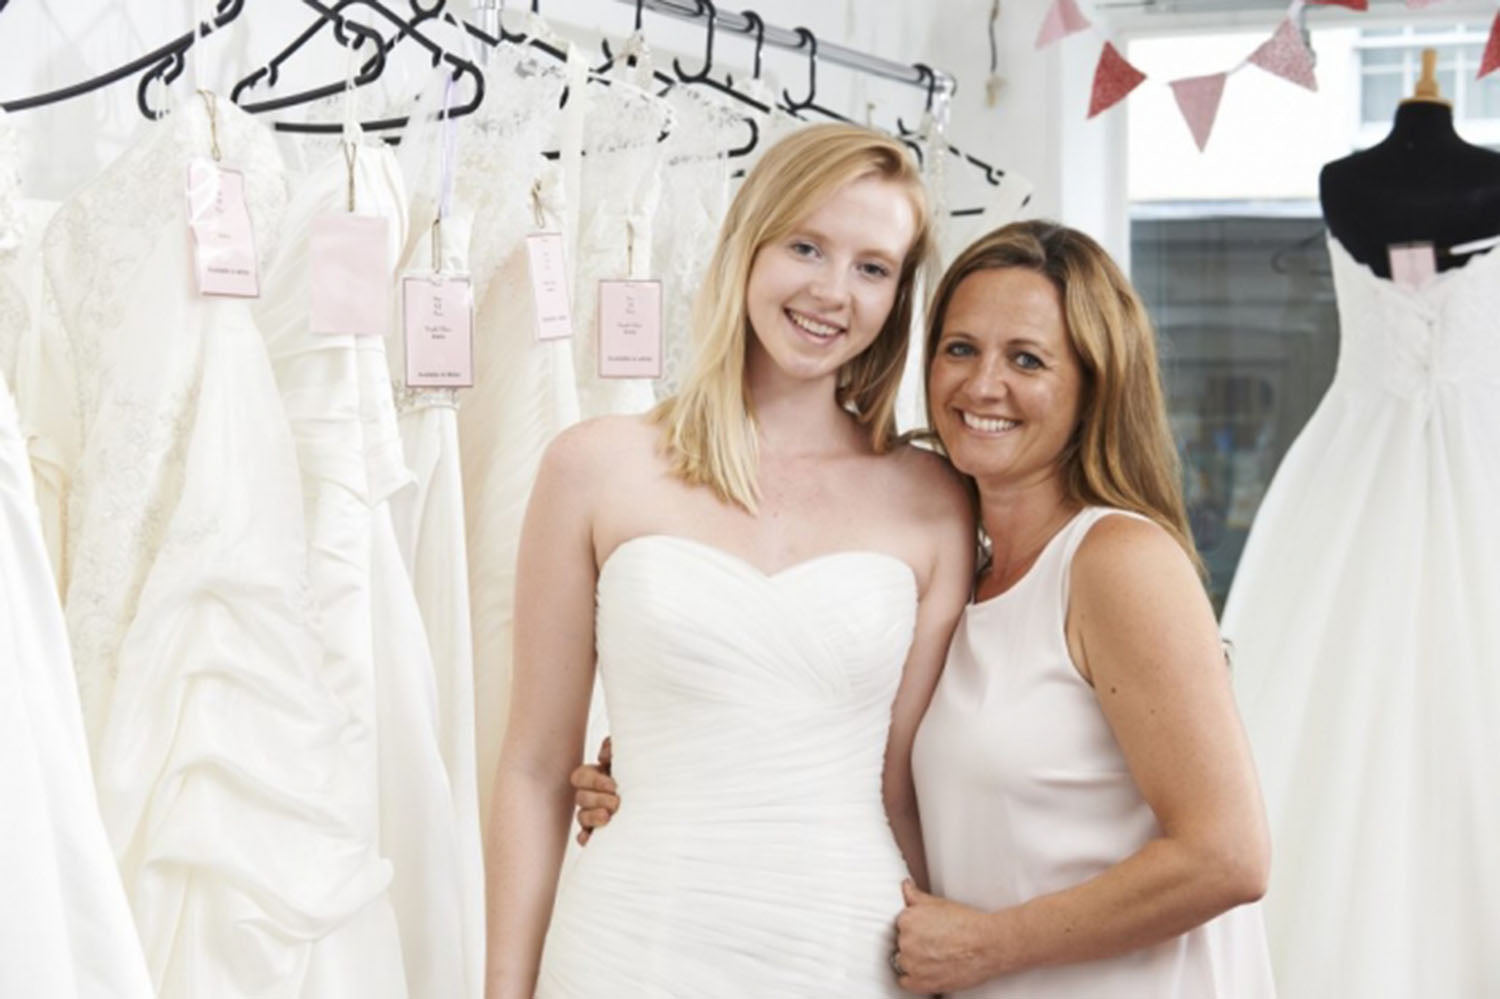 daughter and mum wedding dress shopping